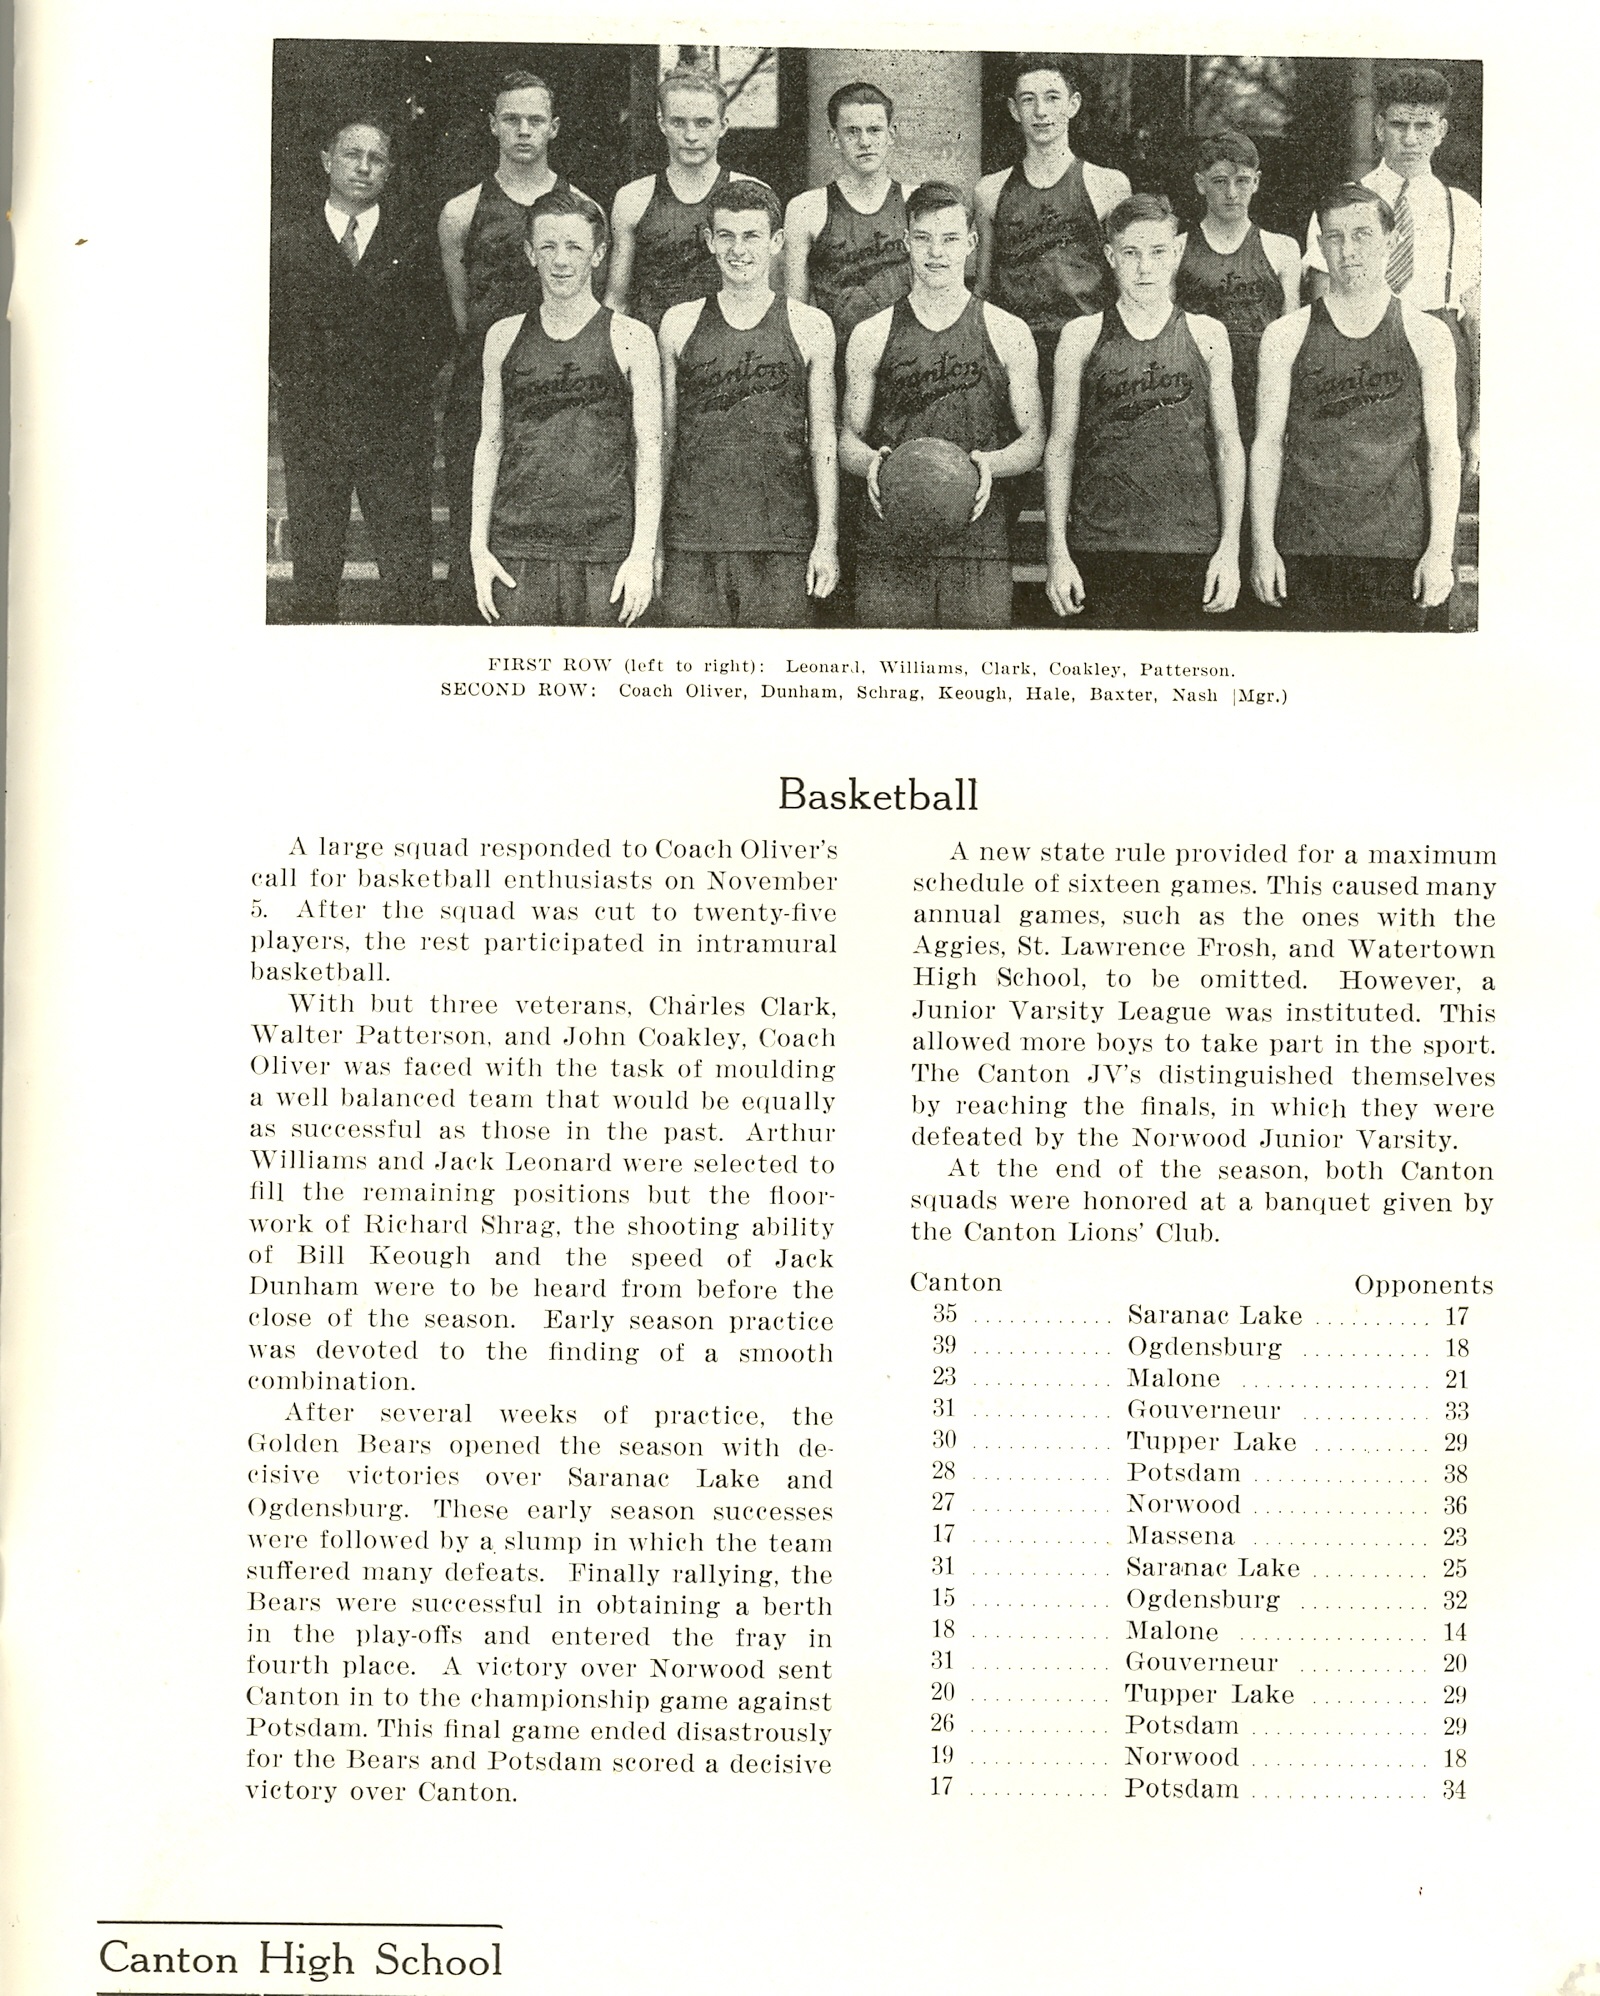 Canton Basketball Team in 1939